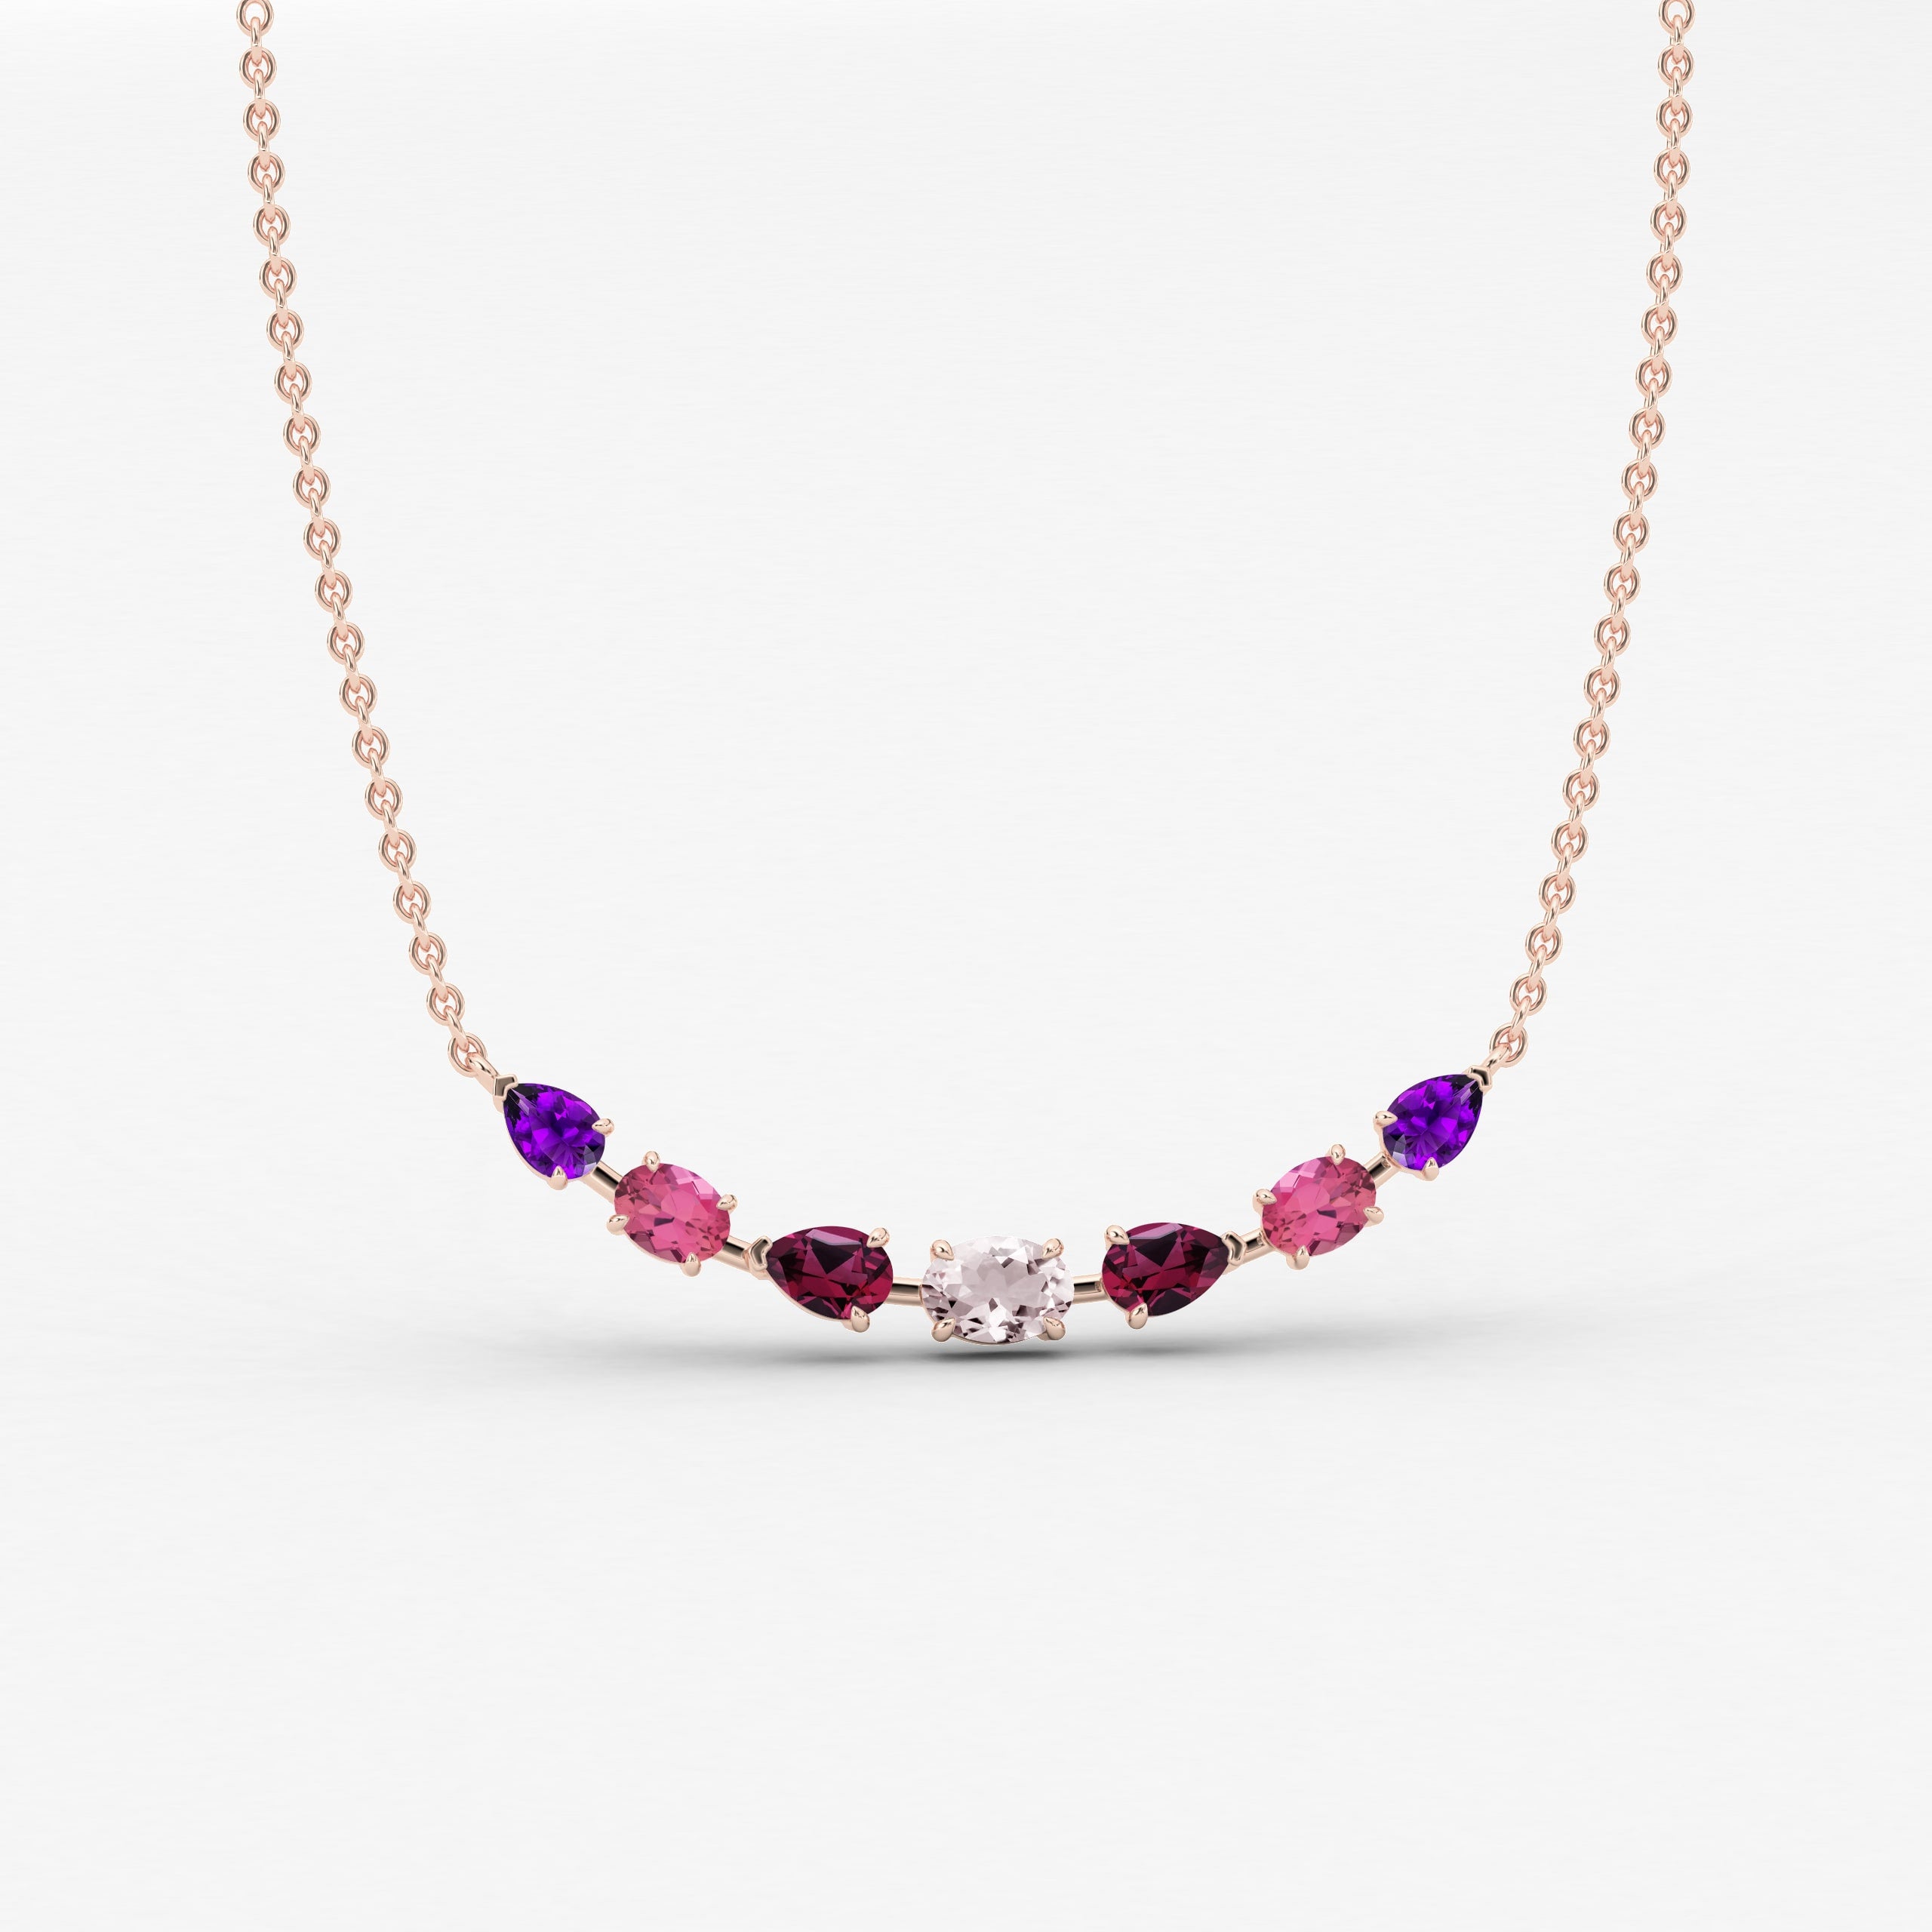 Gemstone bar necklace in rose gold